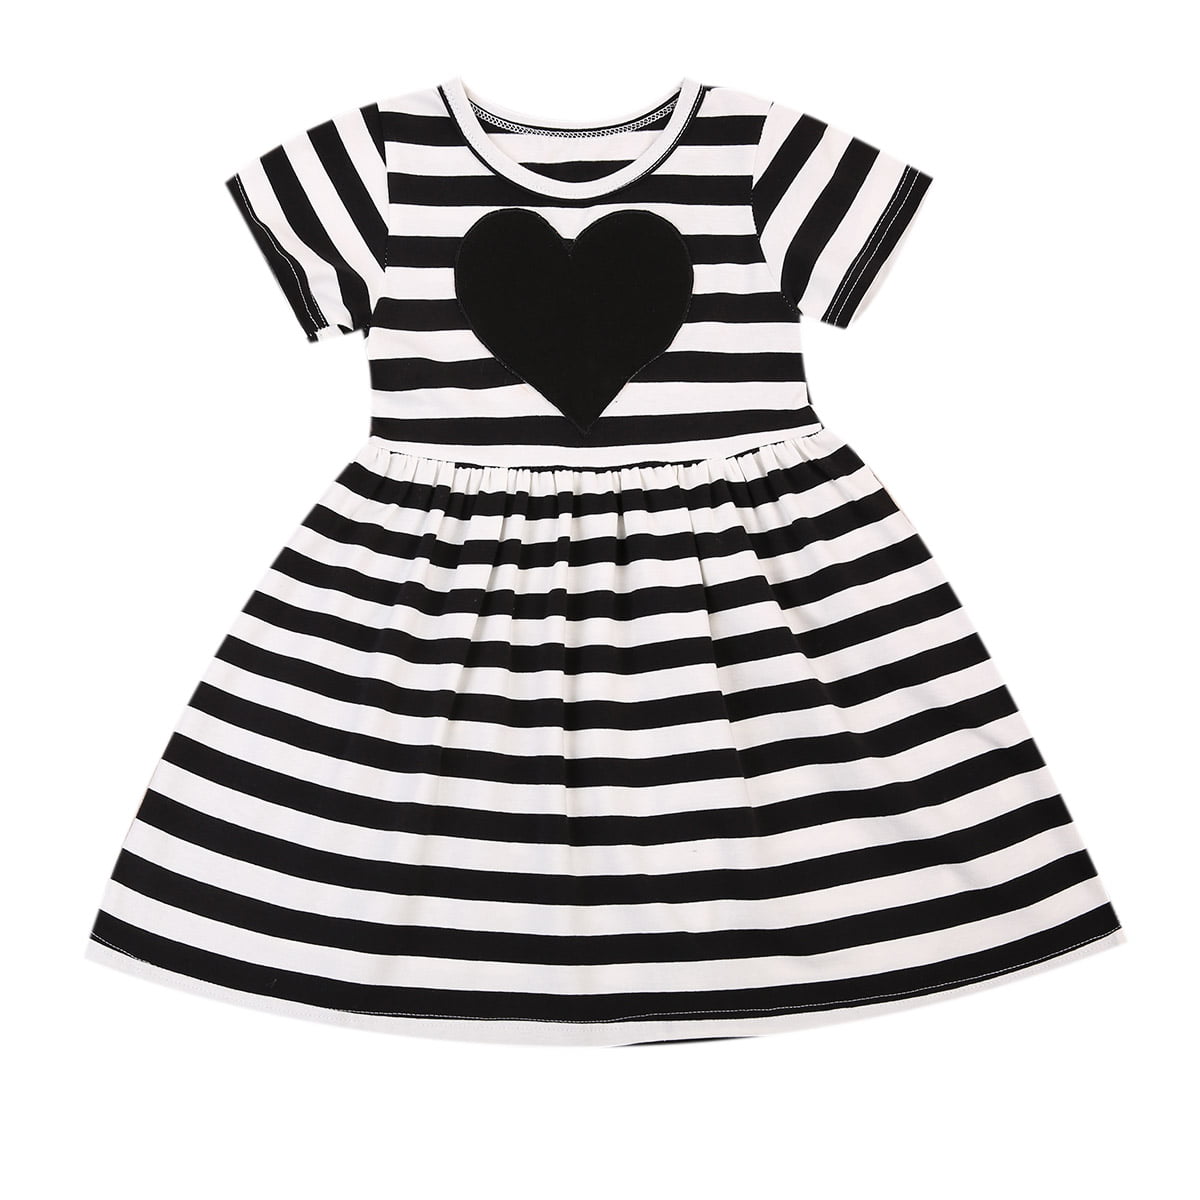 Kidzone Girls Toddler/Little Girls Black Striped Dress Size 2T 3T 4T 4 5 6 6X 